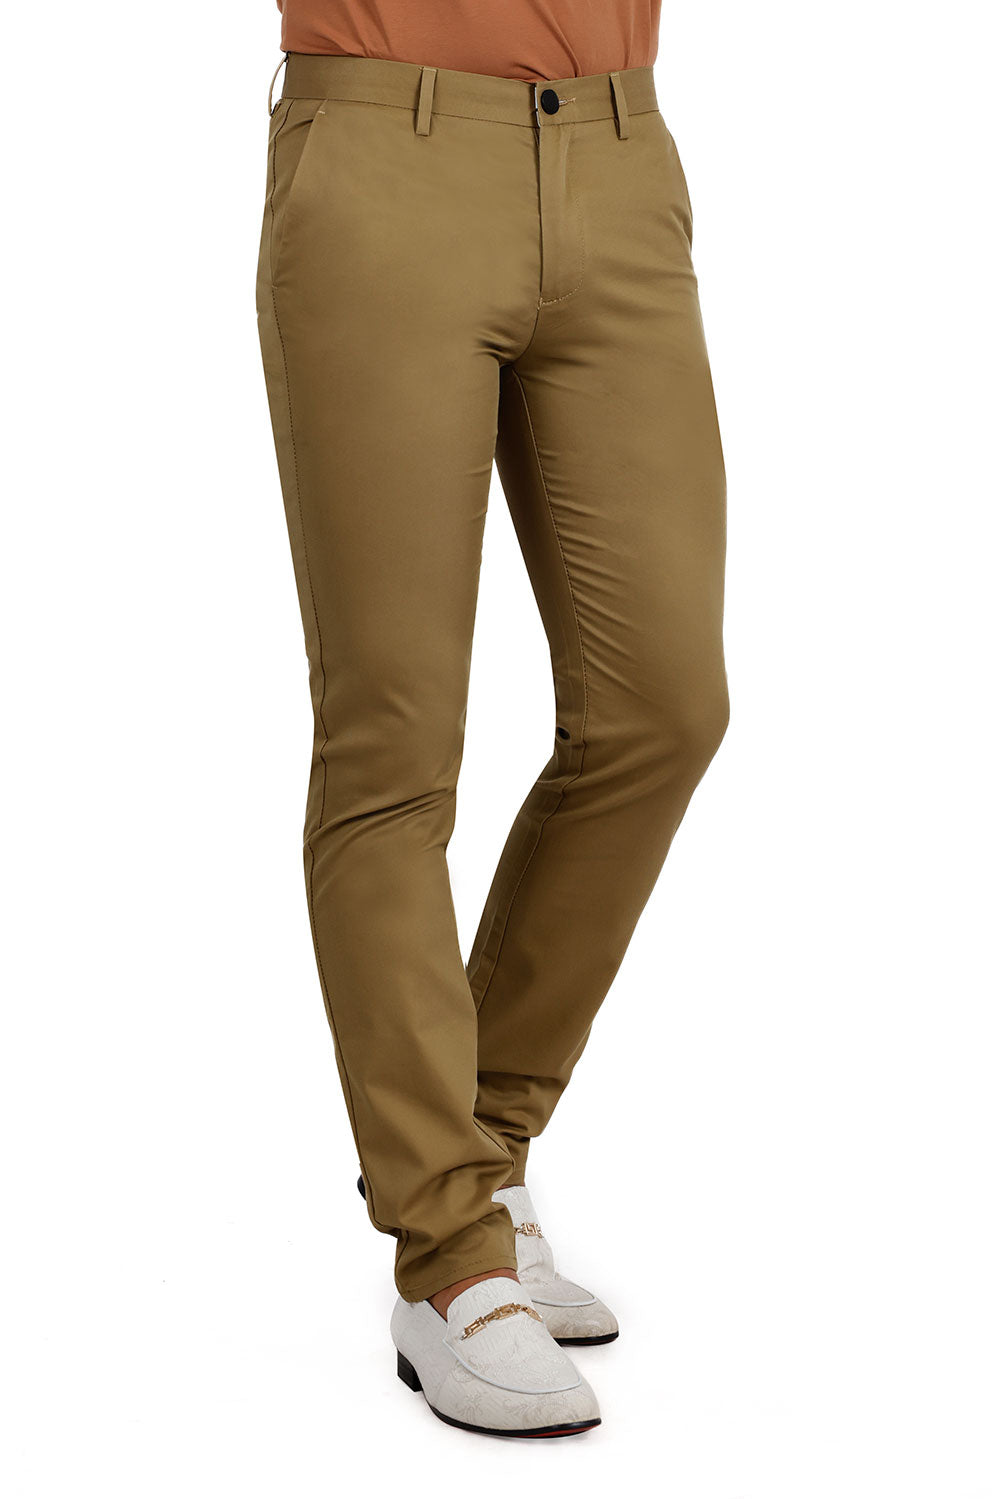 BARABAS Men's Solid Basic Color Casual Dress Pants B2062 Camel